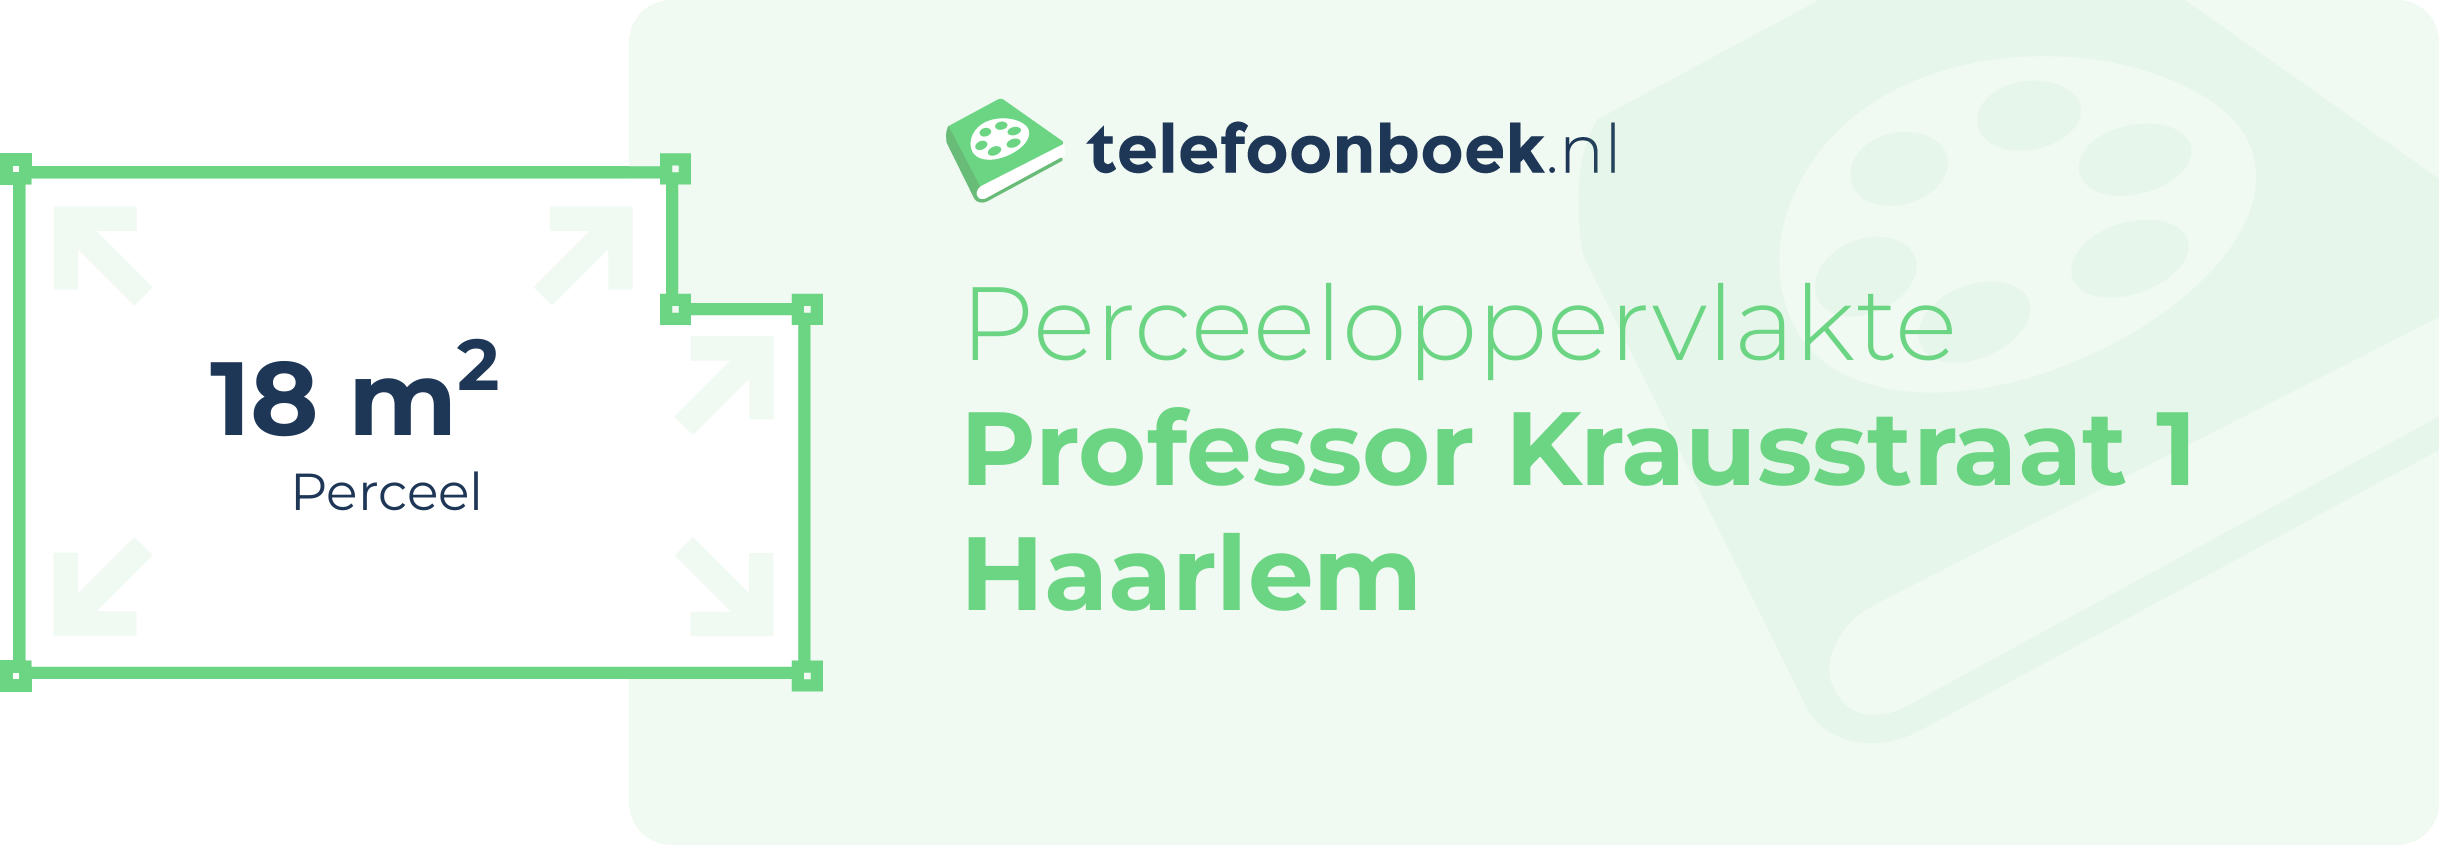 Perceeloppervlakte Professor Krausstraat 1 Haarlem